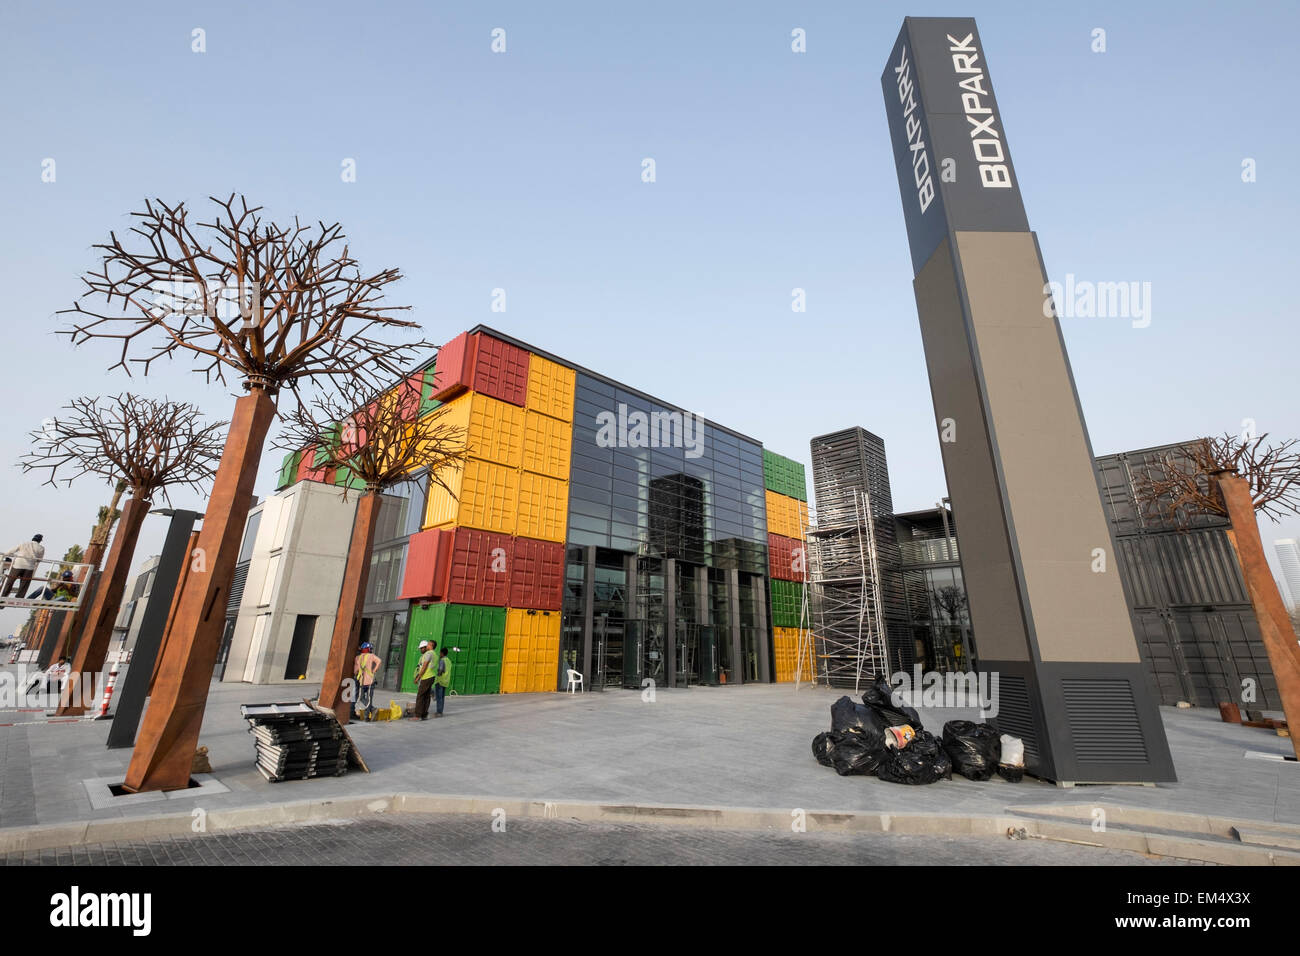 New Boxpark retail development under construction in Dubai United Arab Emirates Stock Photo